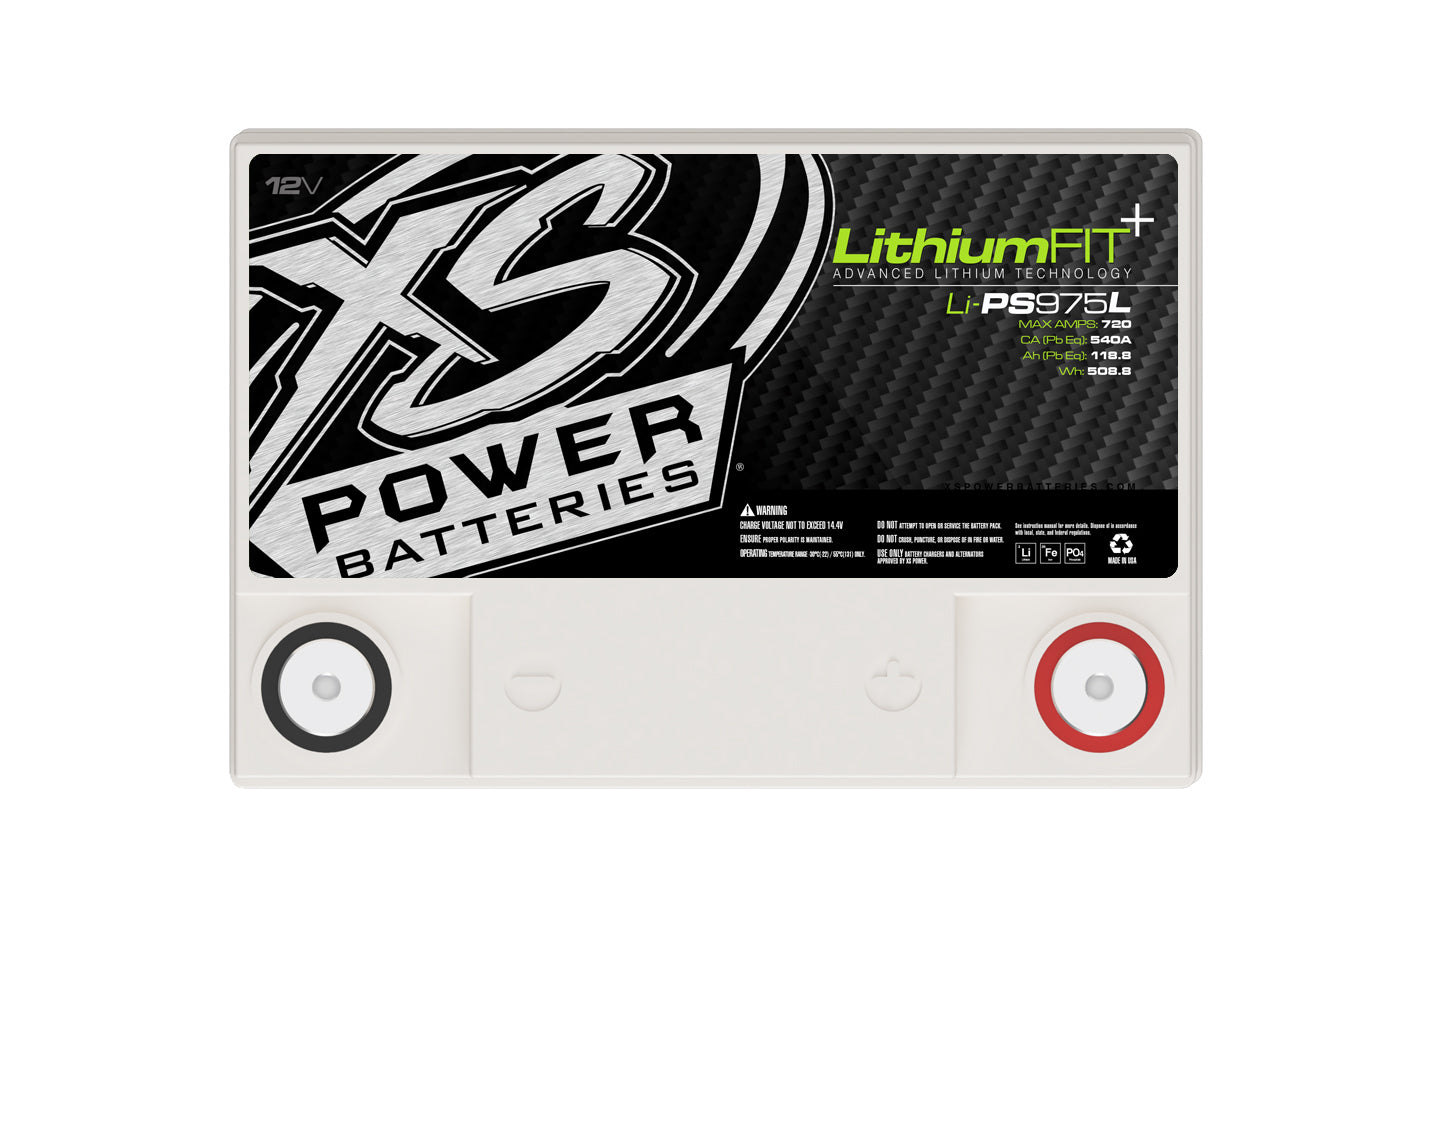 Li-PS975L XS Power 12VDC Lithium Powersports Vehicle Battery 720A 39.6Ah Group U1R